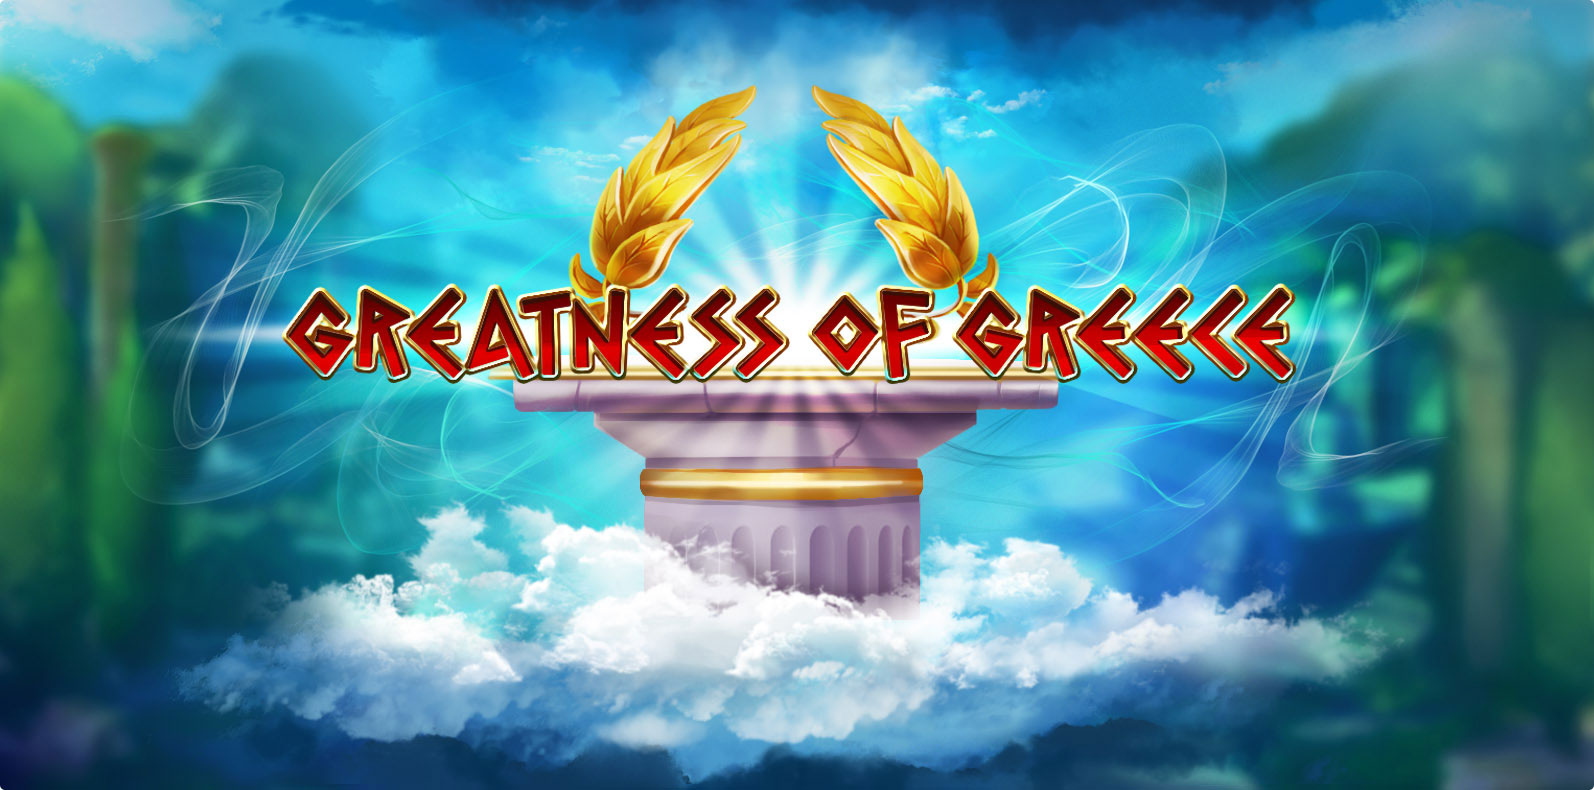 Greatness of Greece - slot machine game development